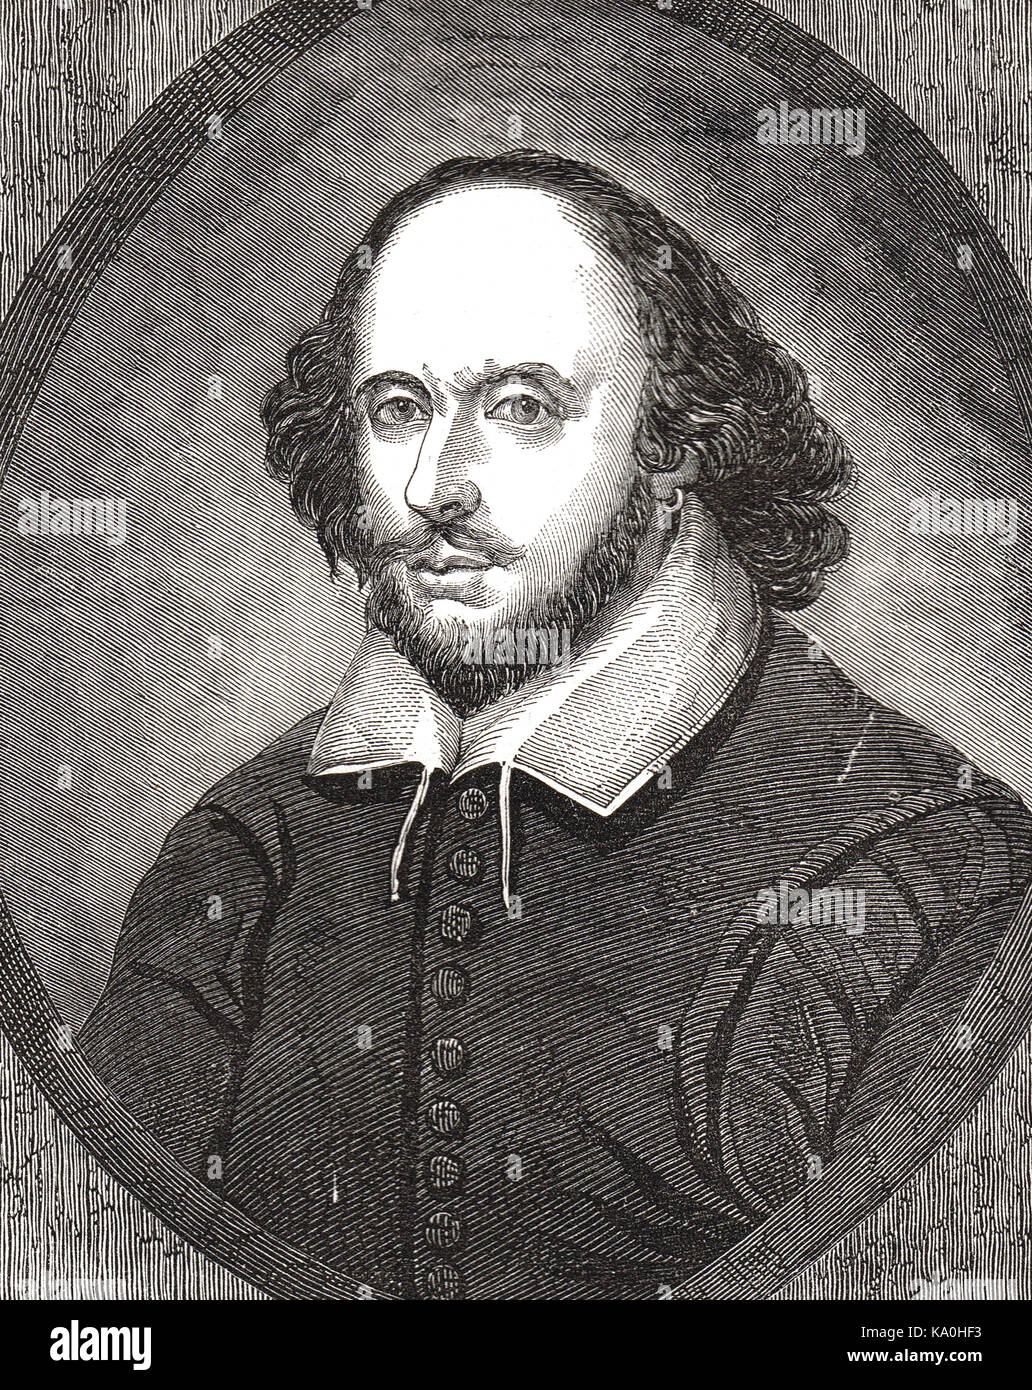 William Shakespeare, 19e siècle gravure du Chandos Shakespeare Banque D'Images